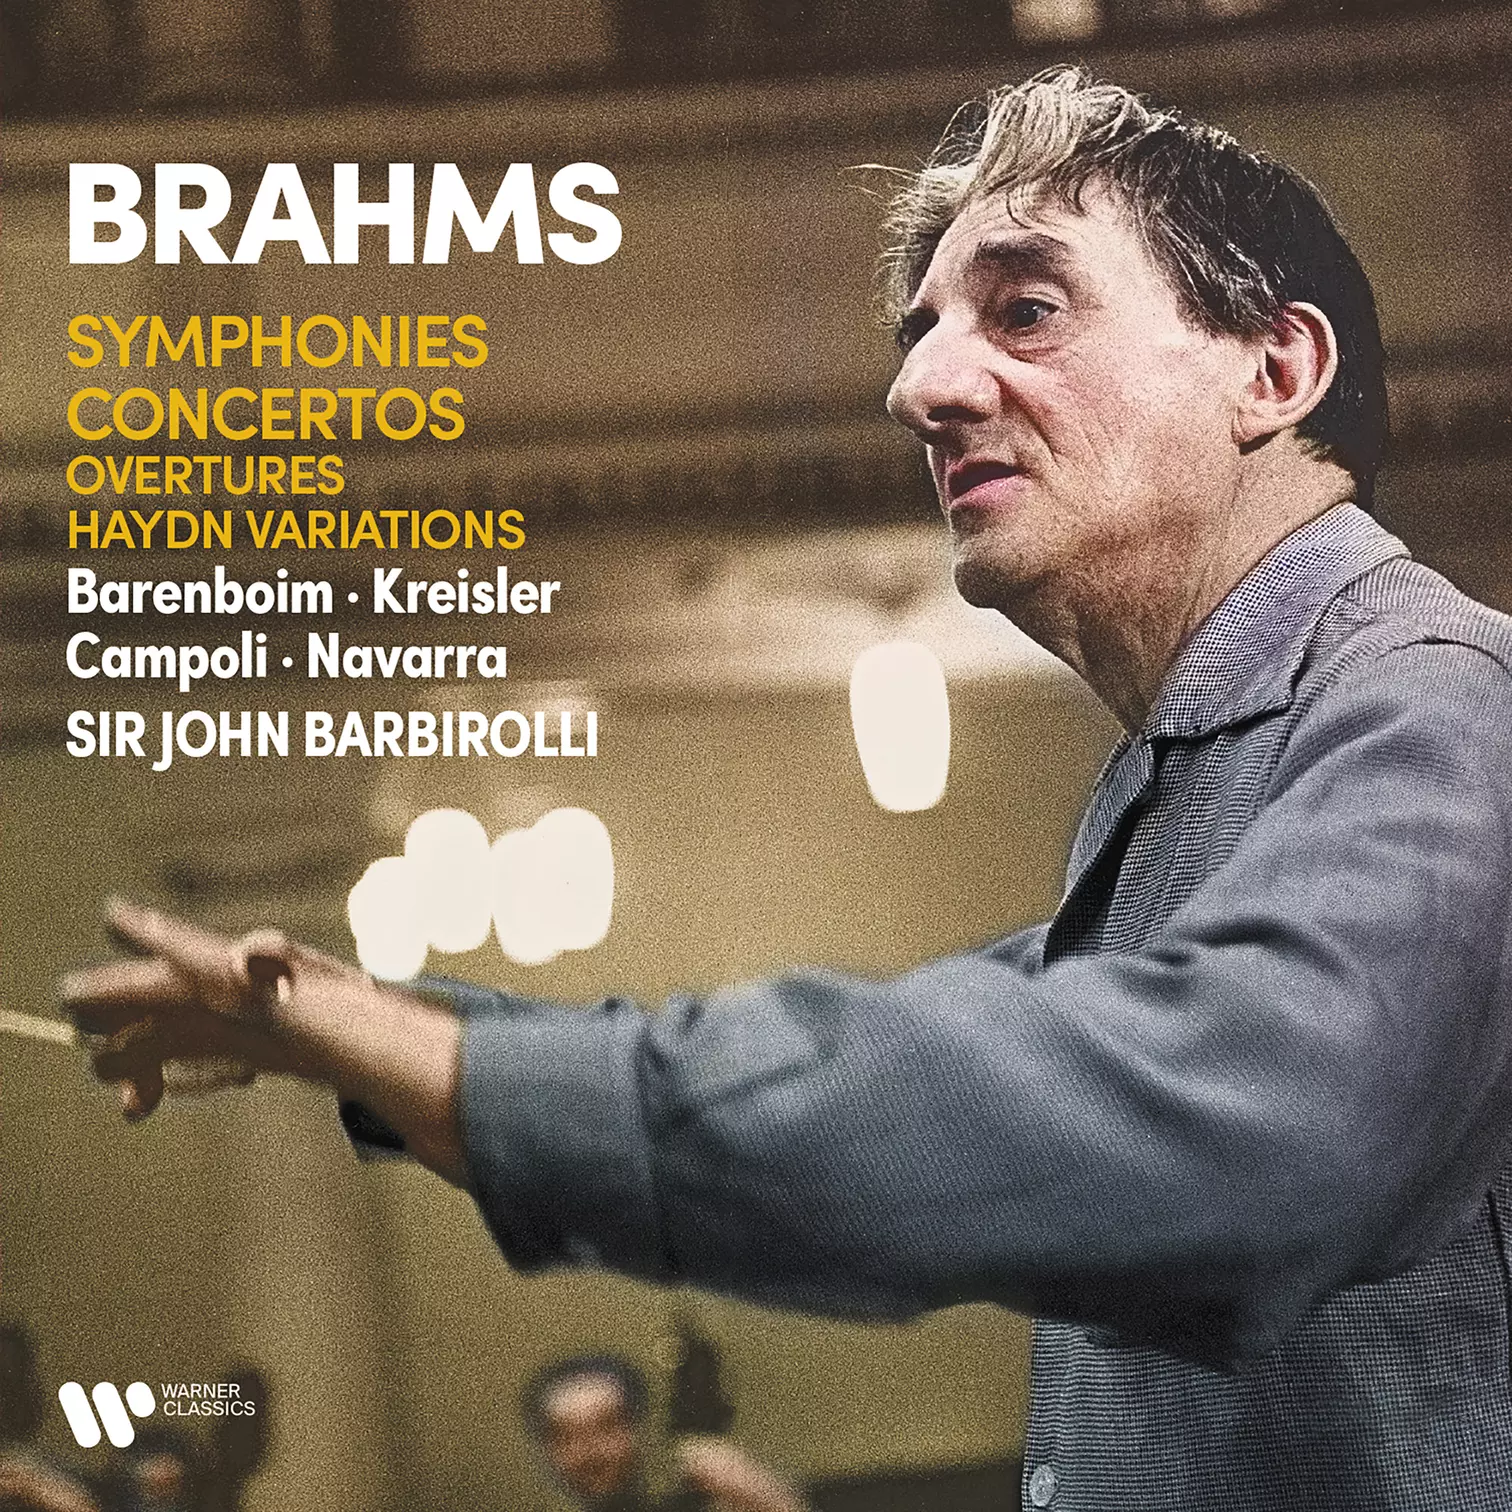 Sir John Barbirolli - Johannes Brahms: Brahms: Symphonies, Concertos, Overtures, Haydn Variations